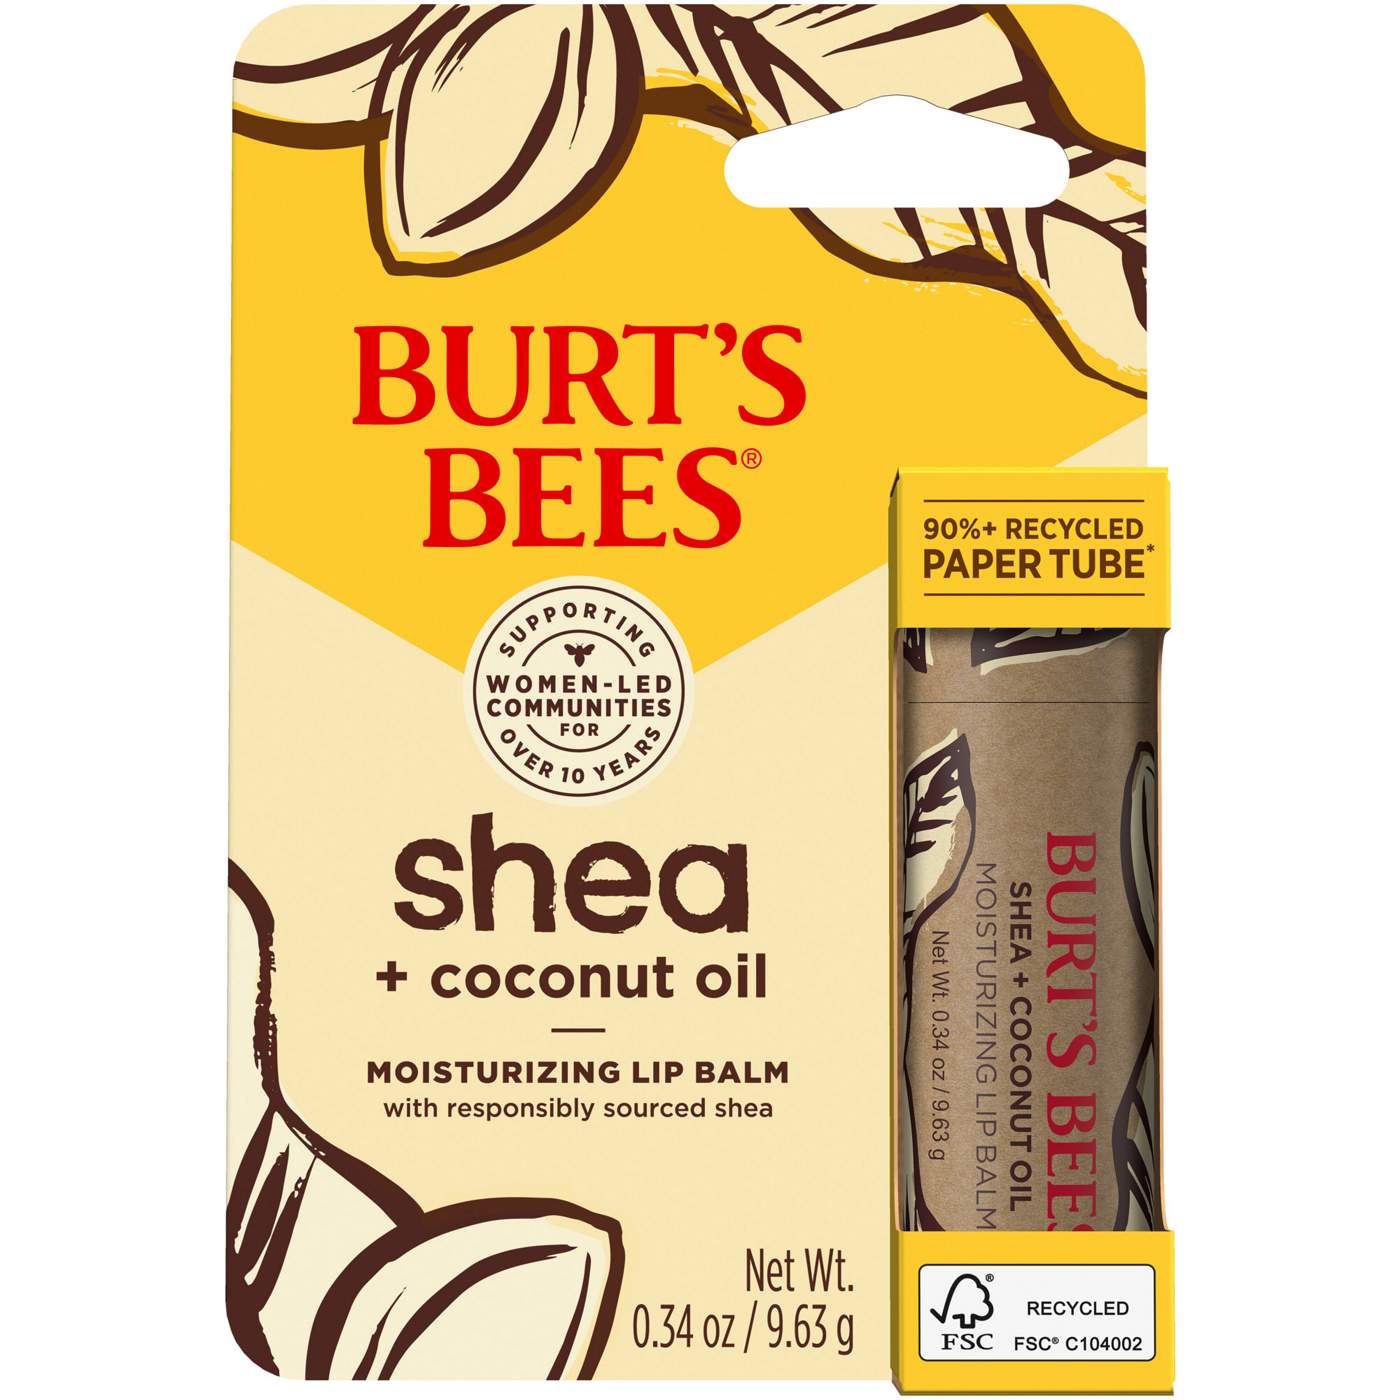 Burt's Bees Shea + Coconut Oil Moisturizing Lip Balm; image 1 of 8